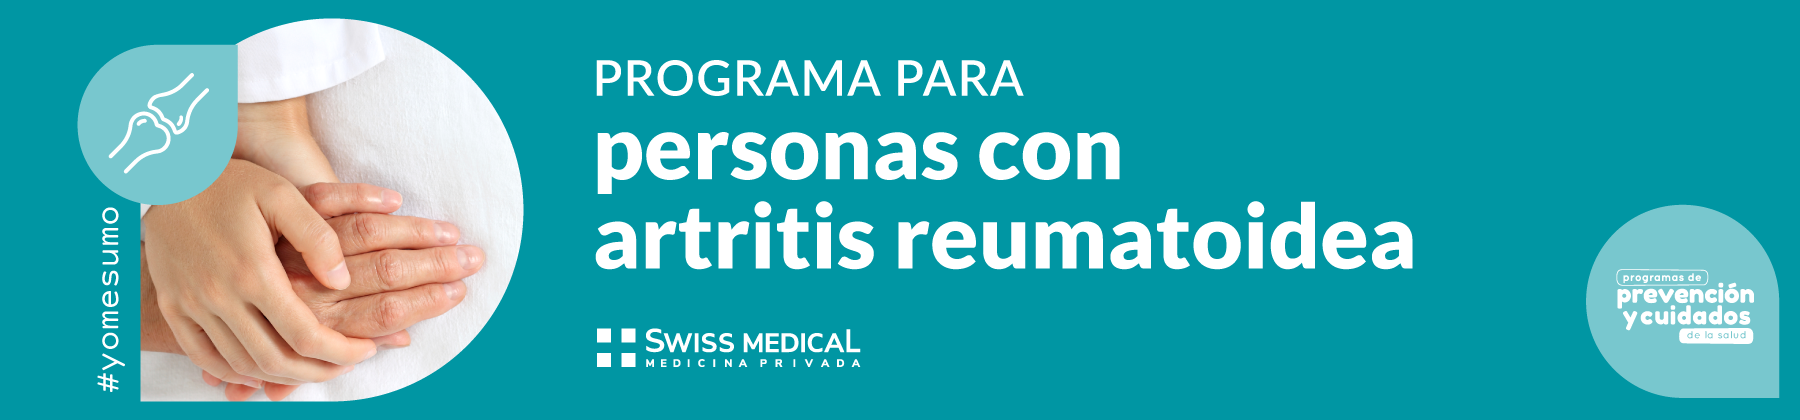 Artritis reumatoidea